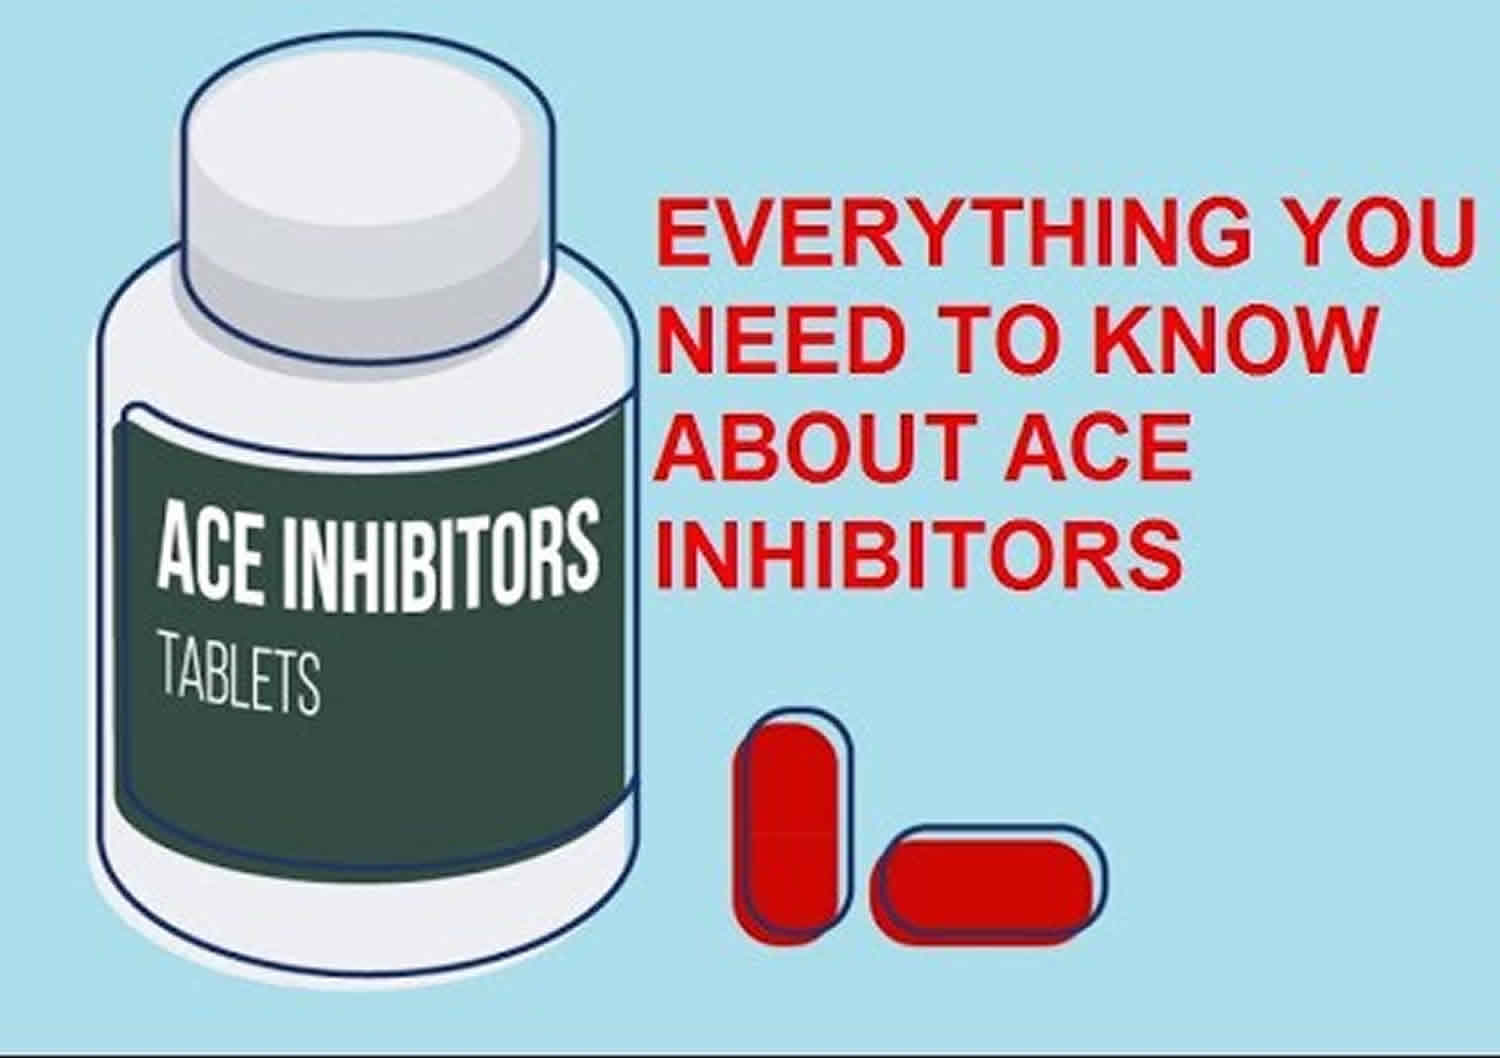 Ace inhibitors